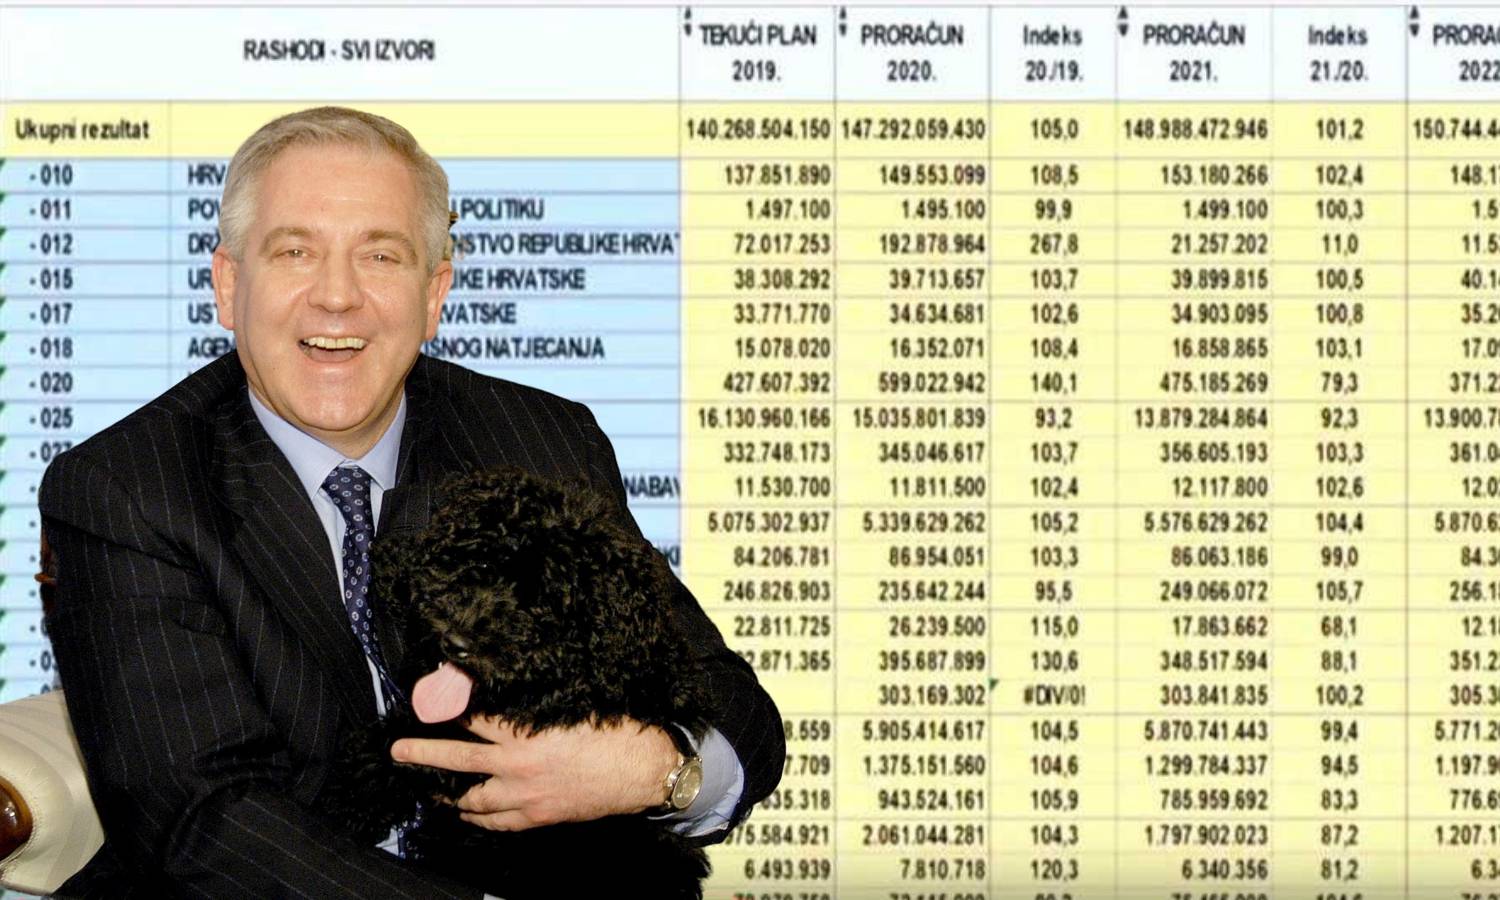 Rekordni proračun! Plenković troši 30 milijardi više od dr. Ive